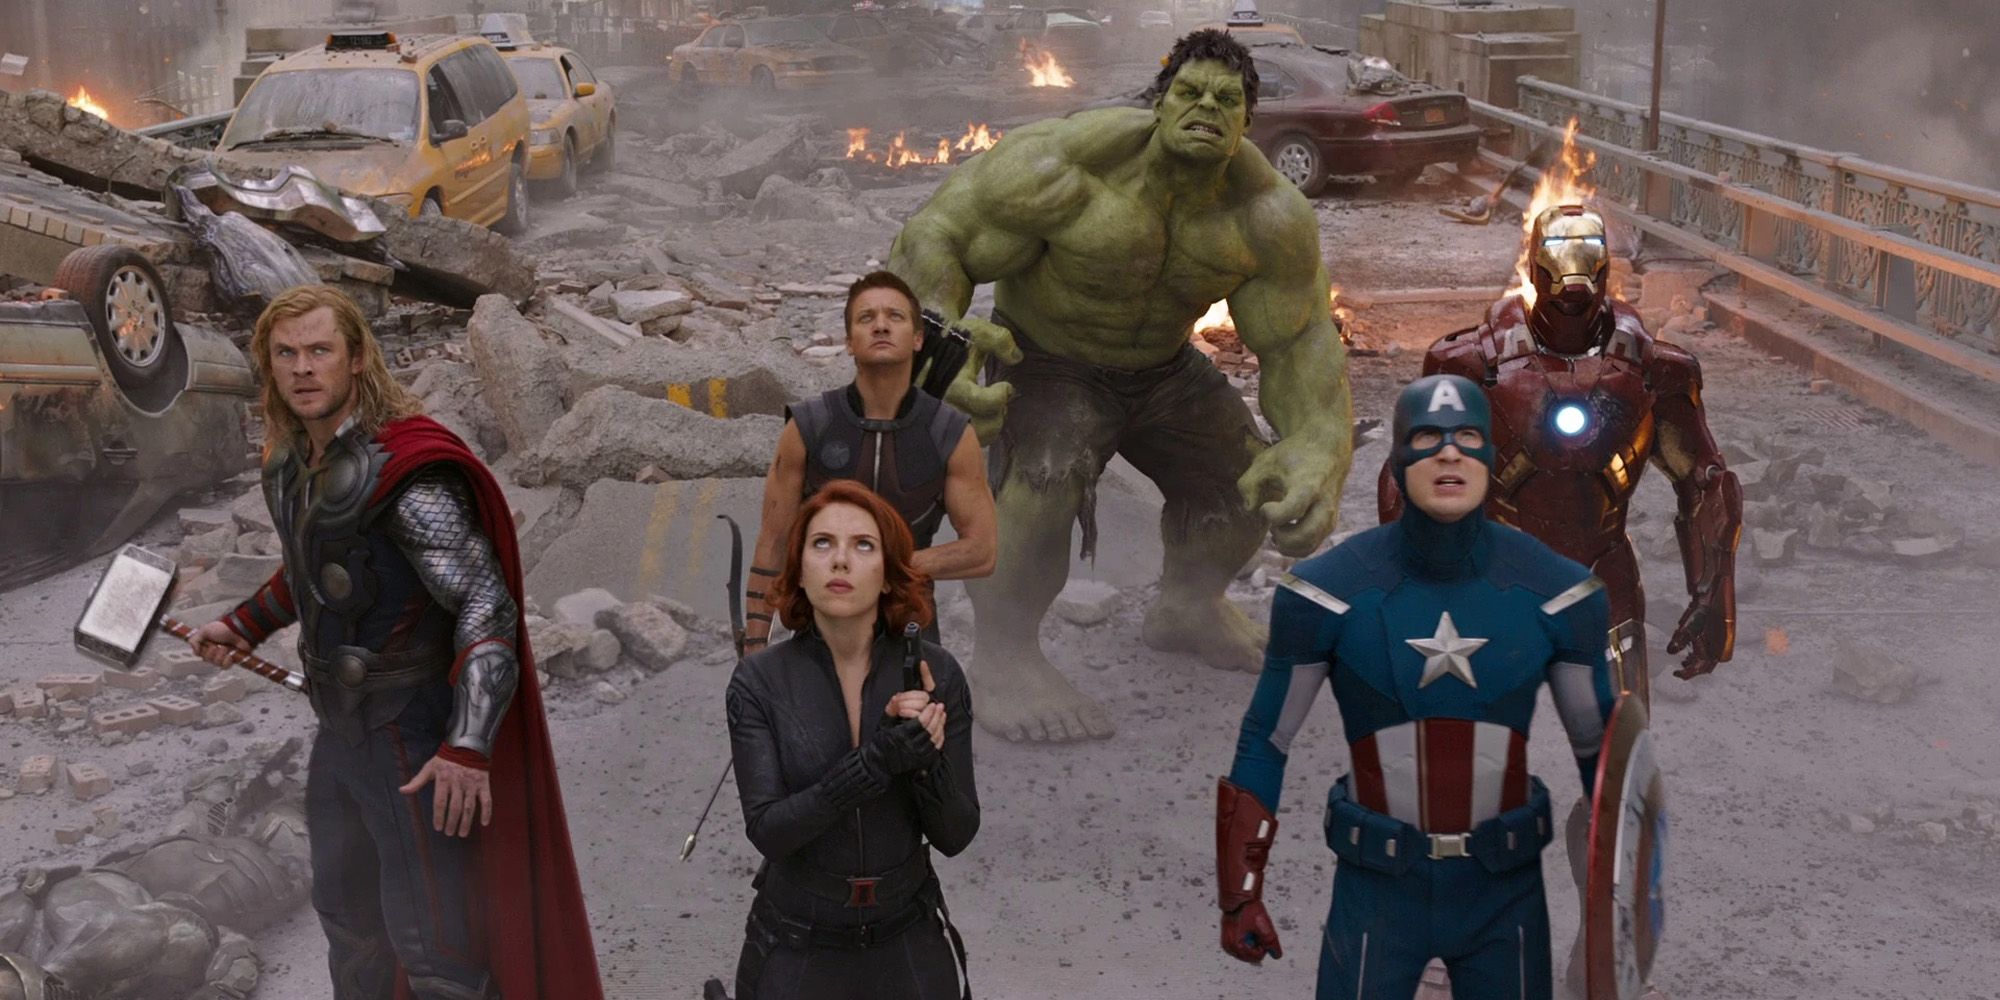 Thor, Hawkeye, Black Widow, Hulk, Captain America and Iron Man gather as Avengers